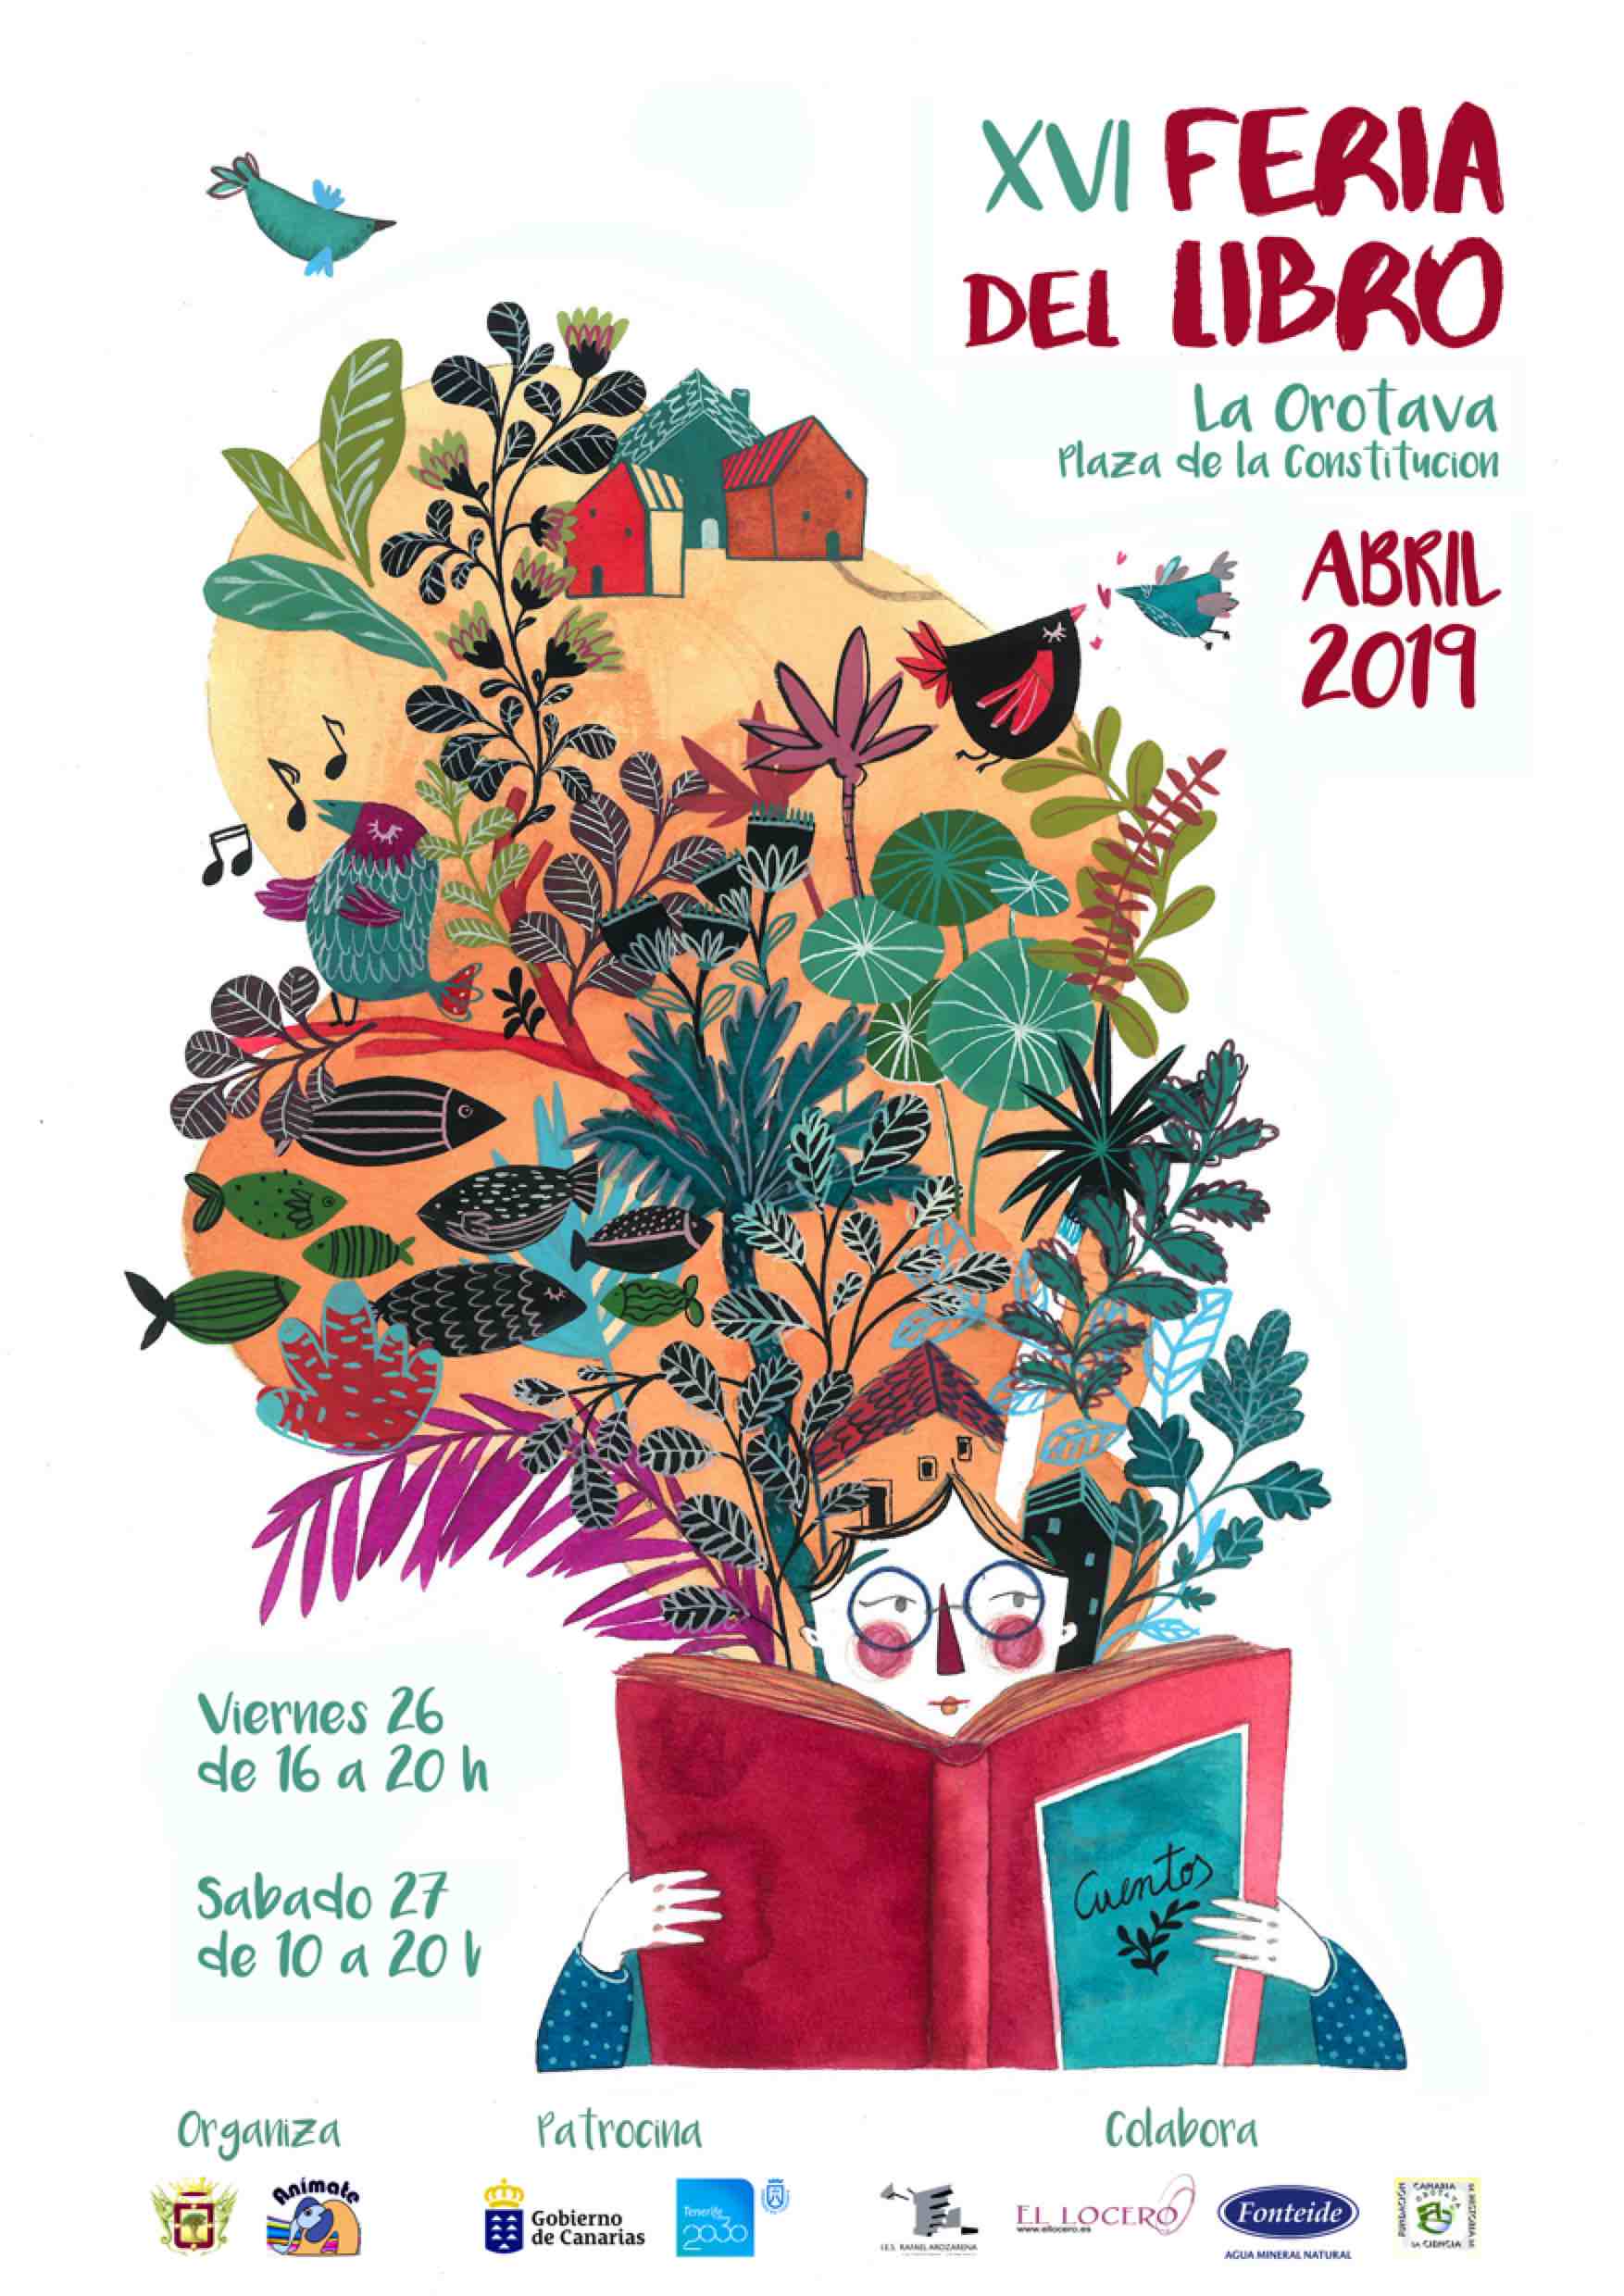 Cartel de la XVI Feria del Libro 2019 de La Orotava